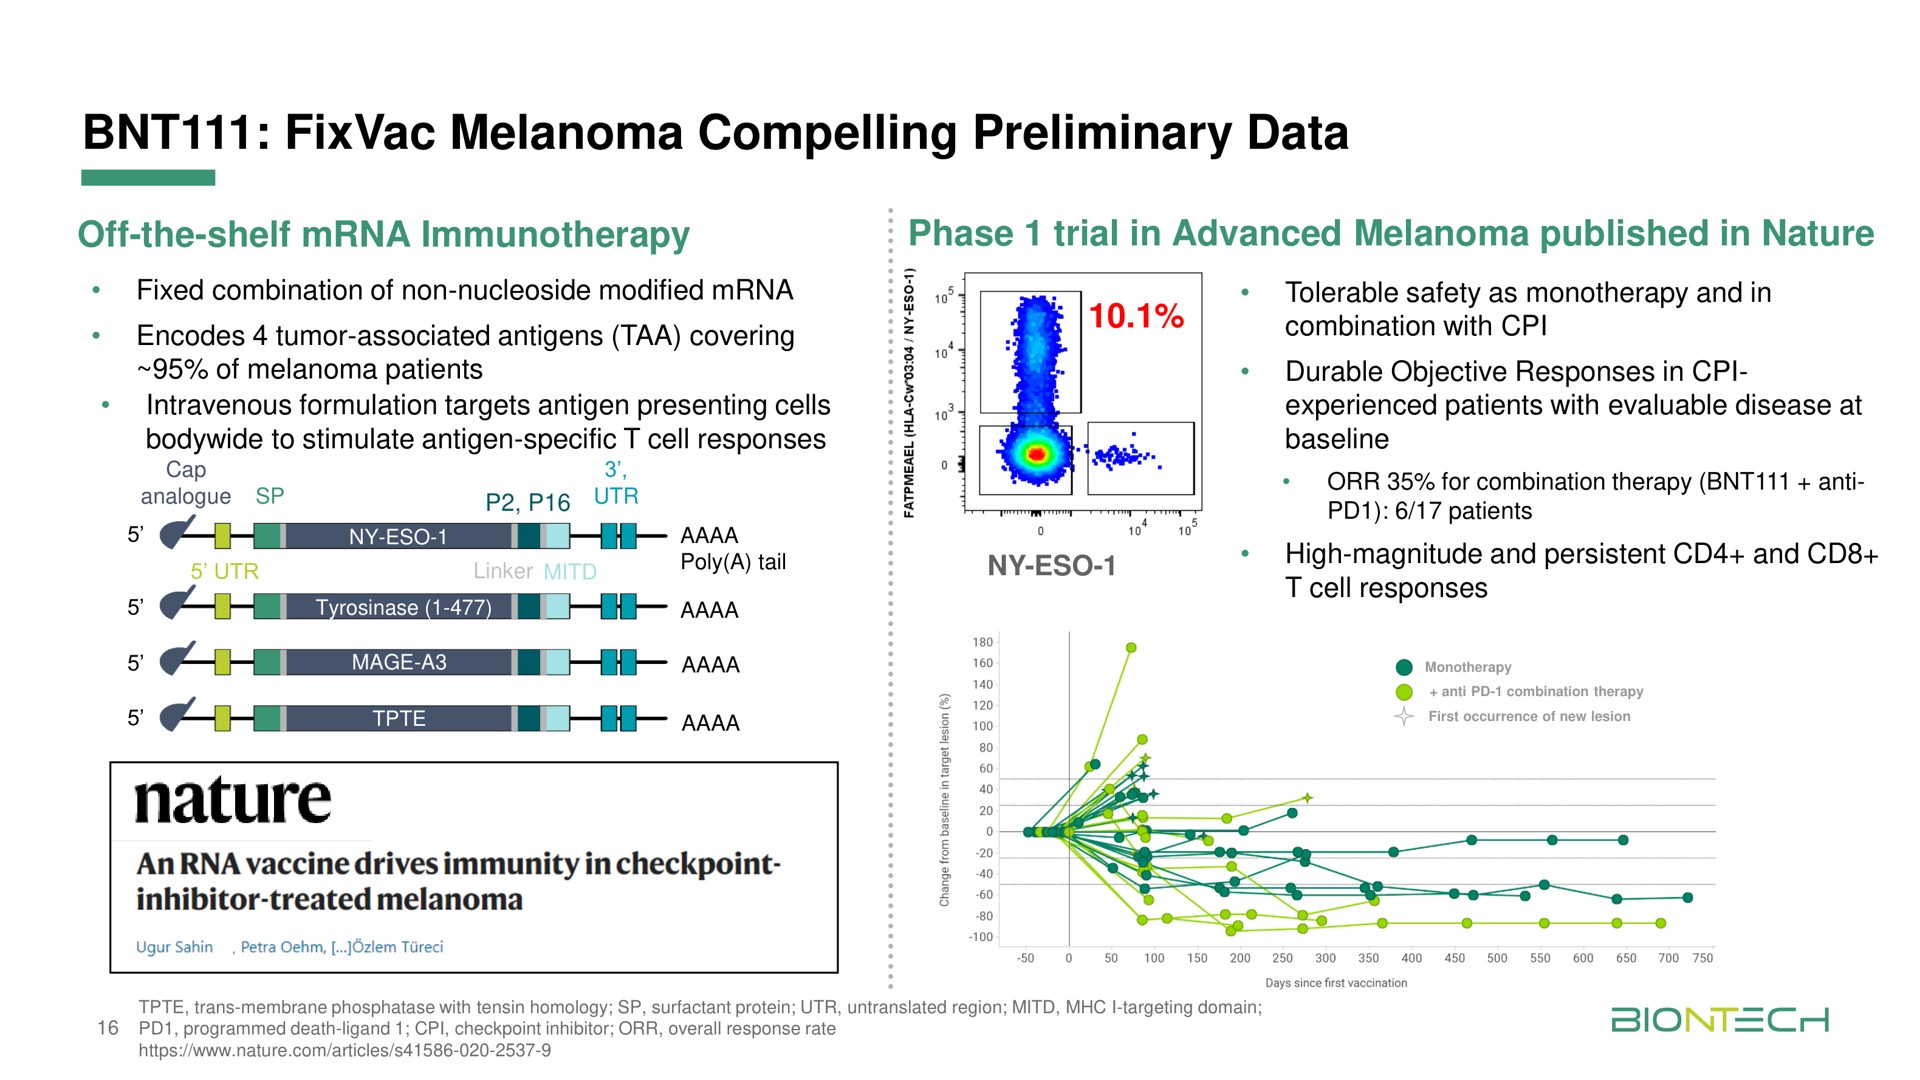 melanoma compelling preliminary data nature | BioNTech